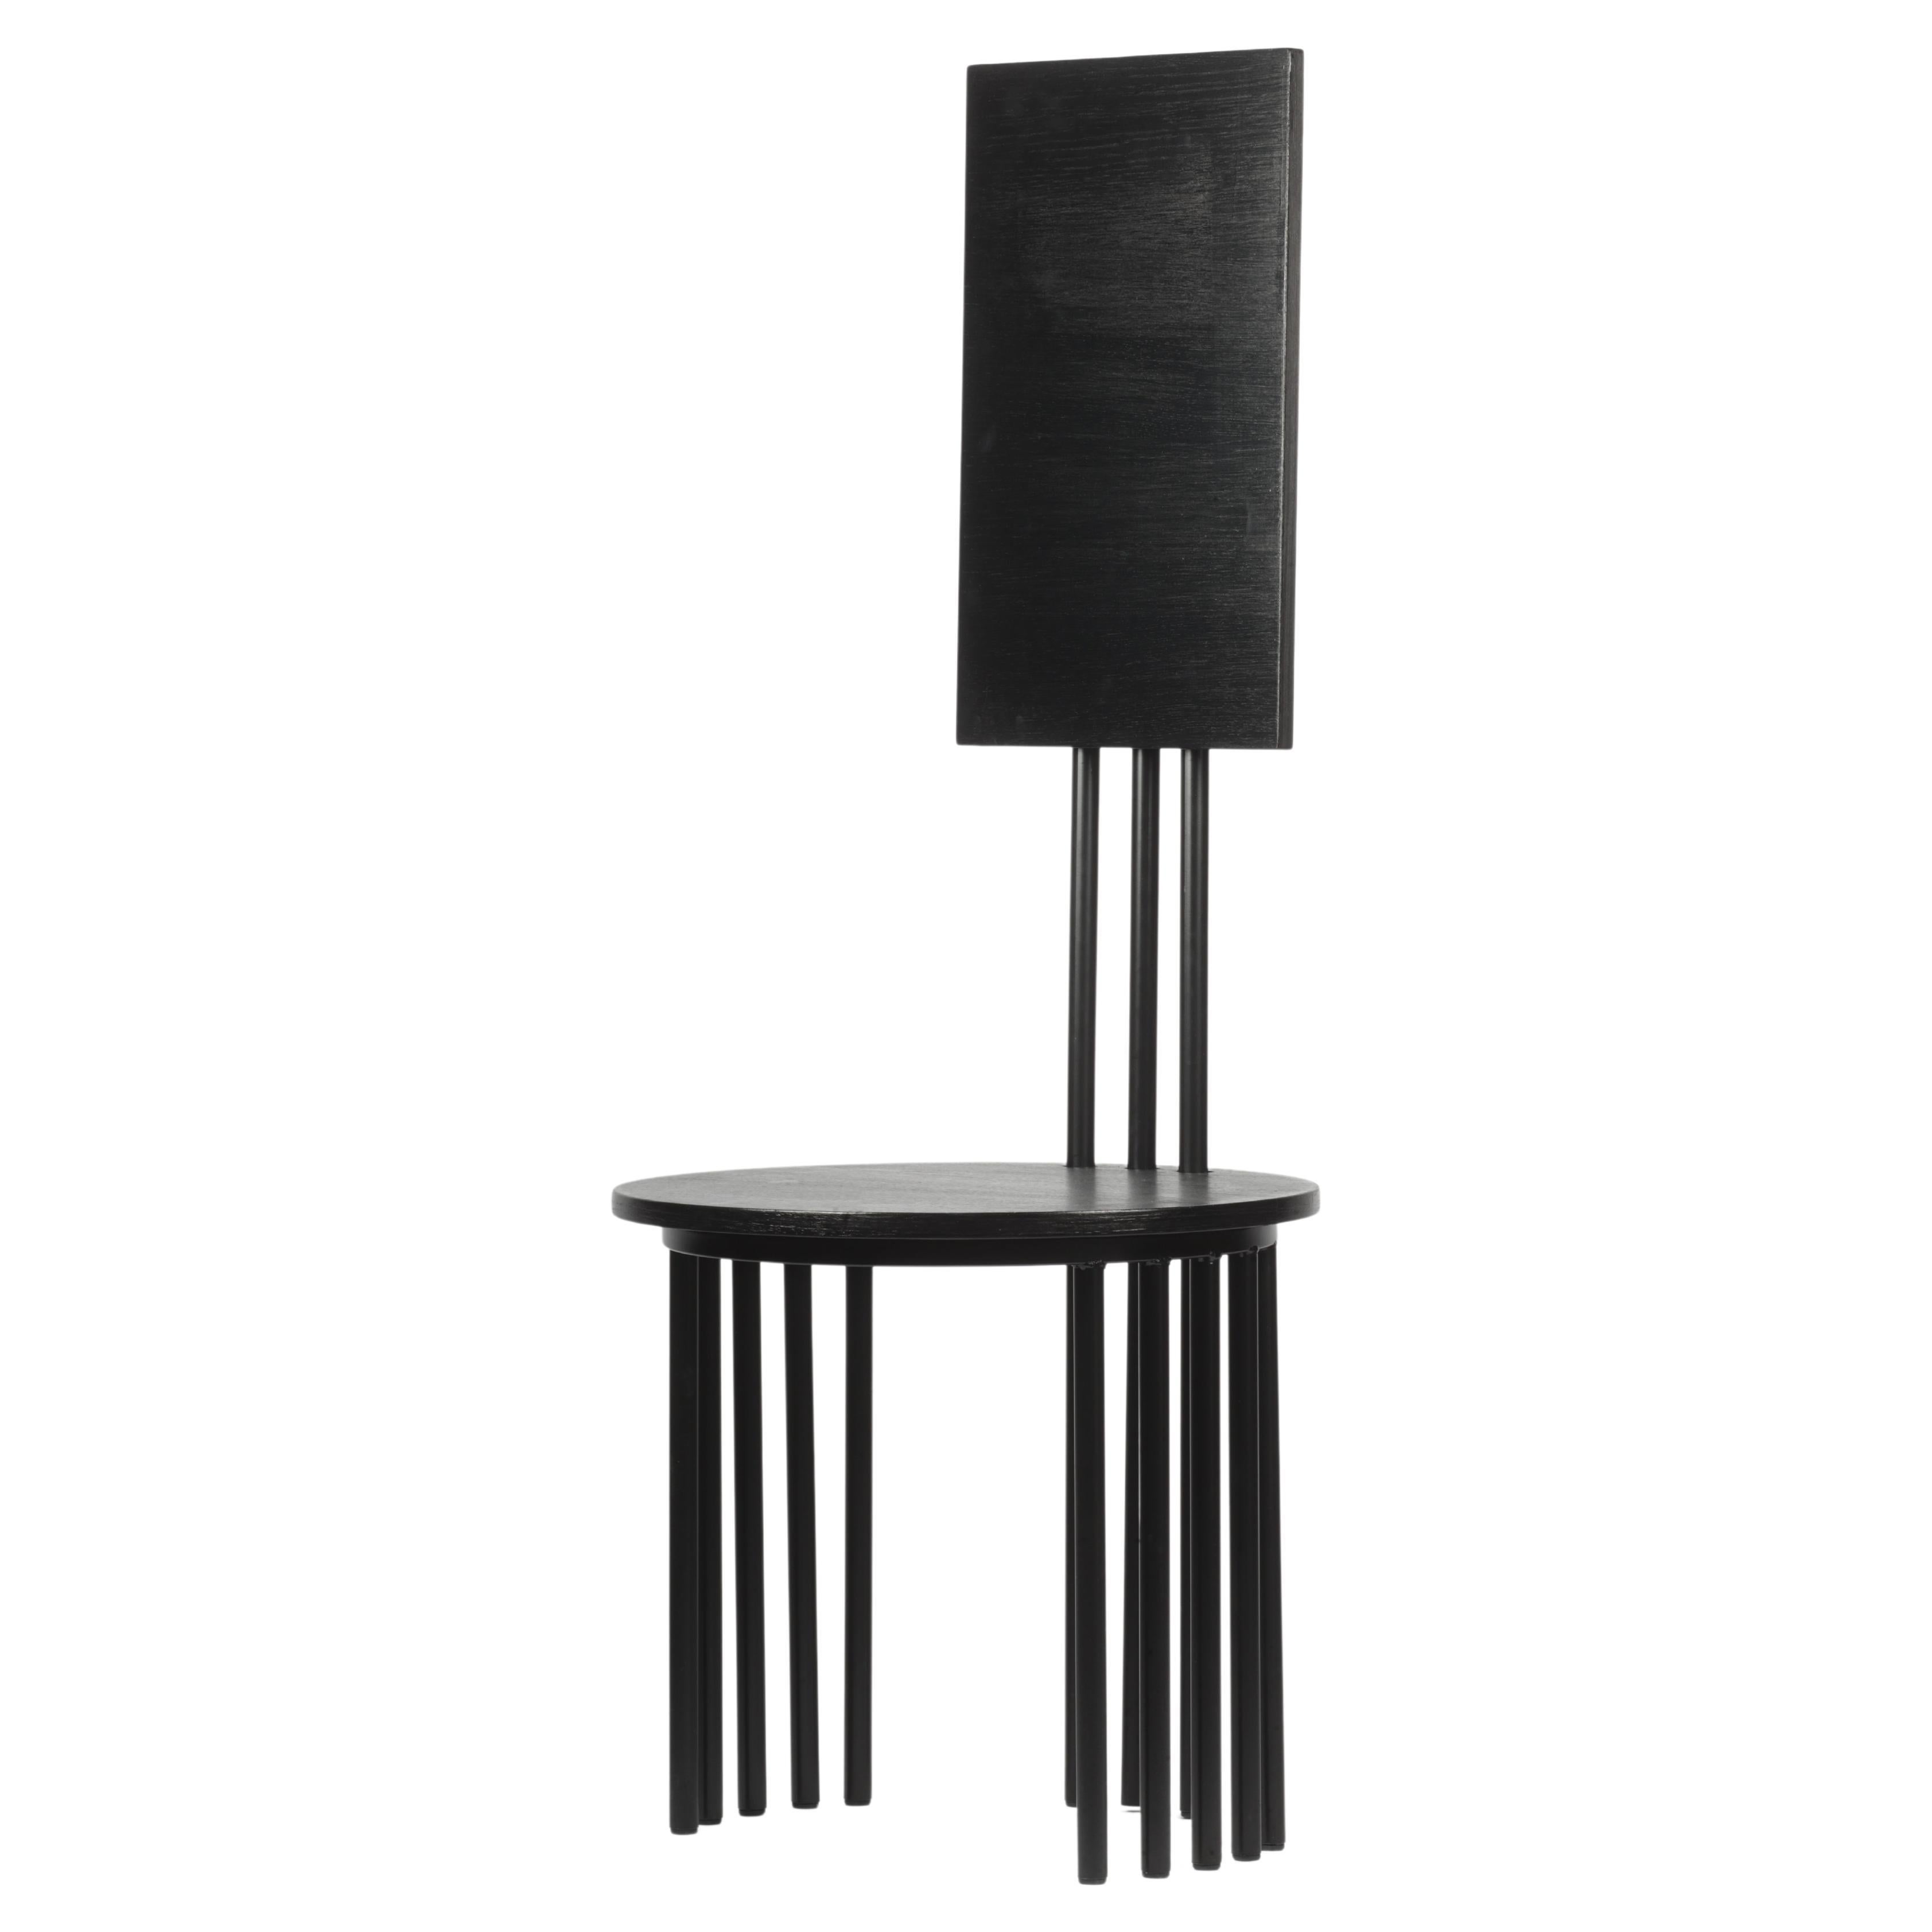 Reina-Stuhl, schwarzes Holz und Metall, Studio Mohs